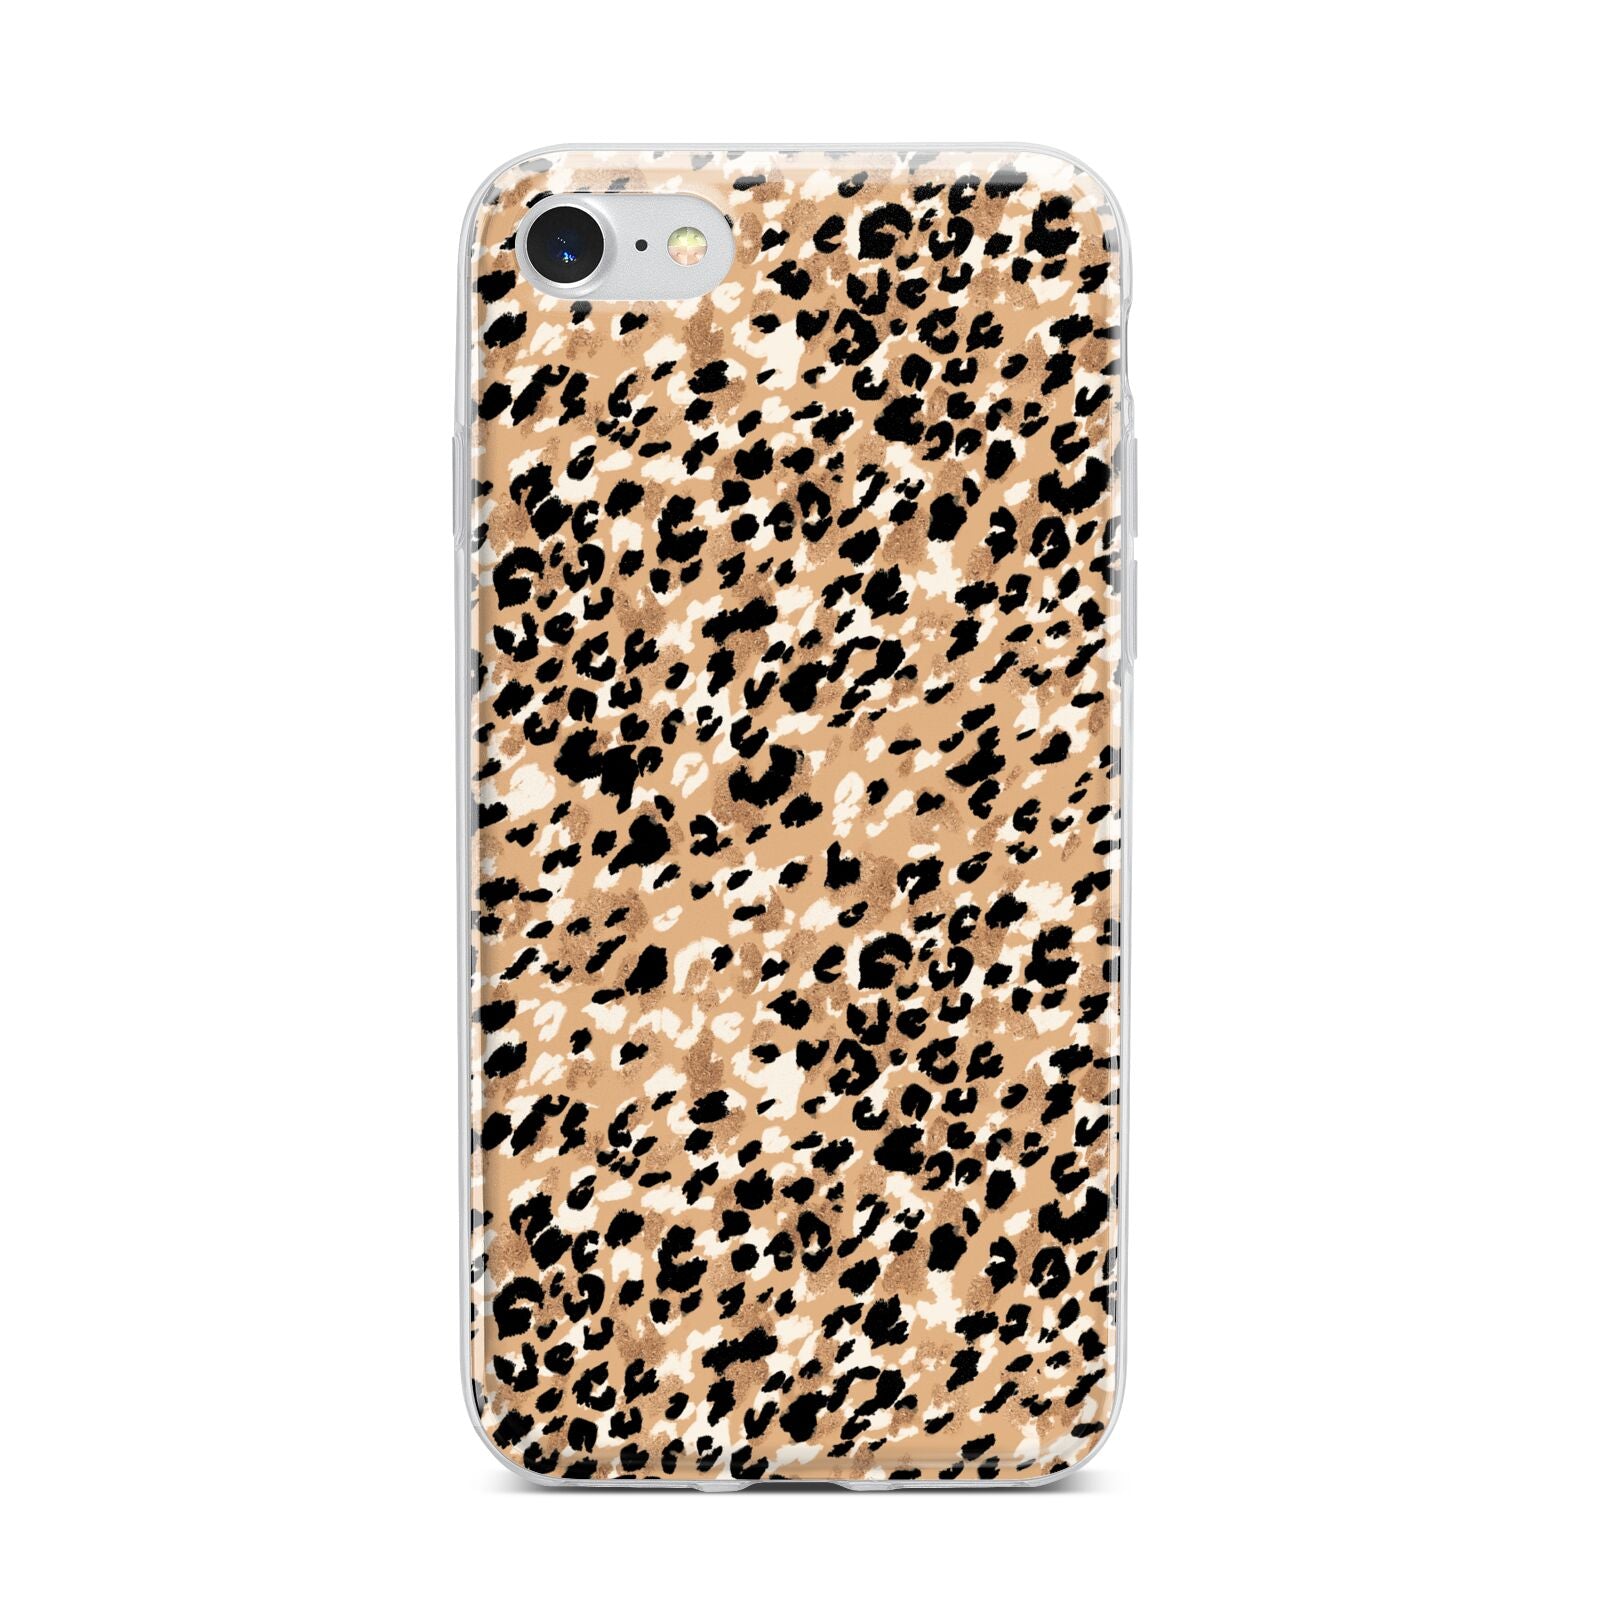 Leopard Print iPhone 7 Bumper Case on Silver iPhone